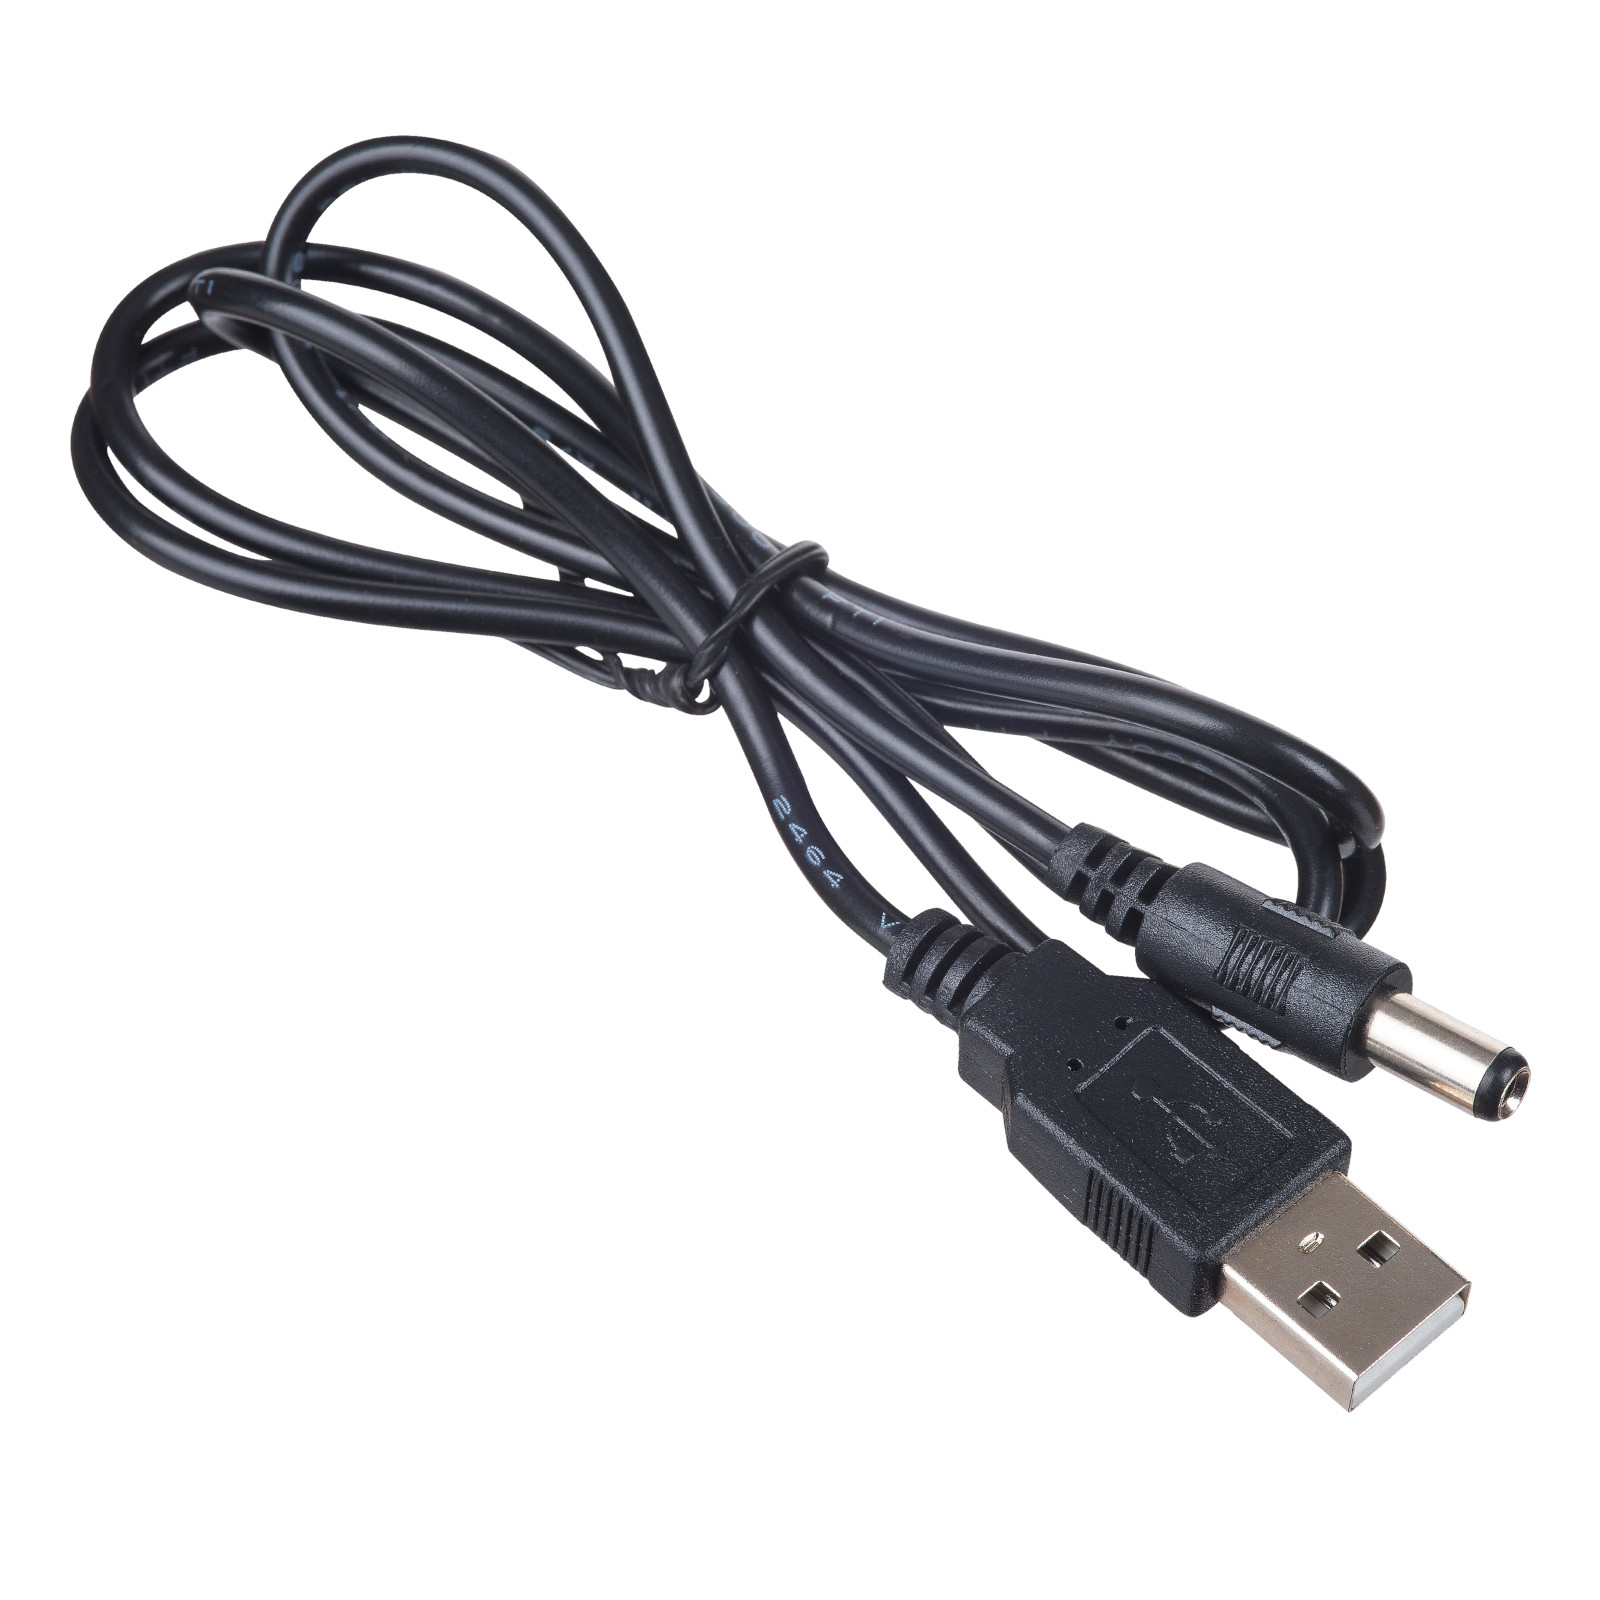 USB kabel Akyga AK-DC-04 - DC 5.5 x 2.5 mm